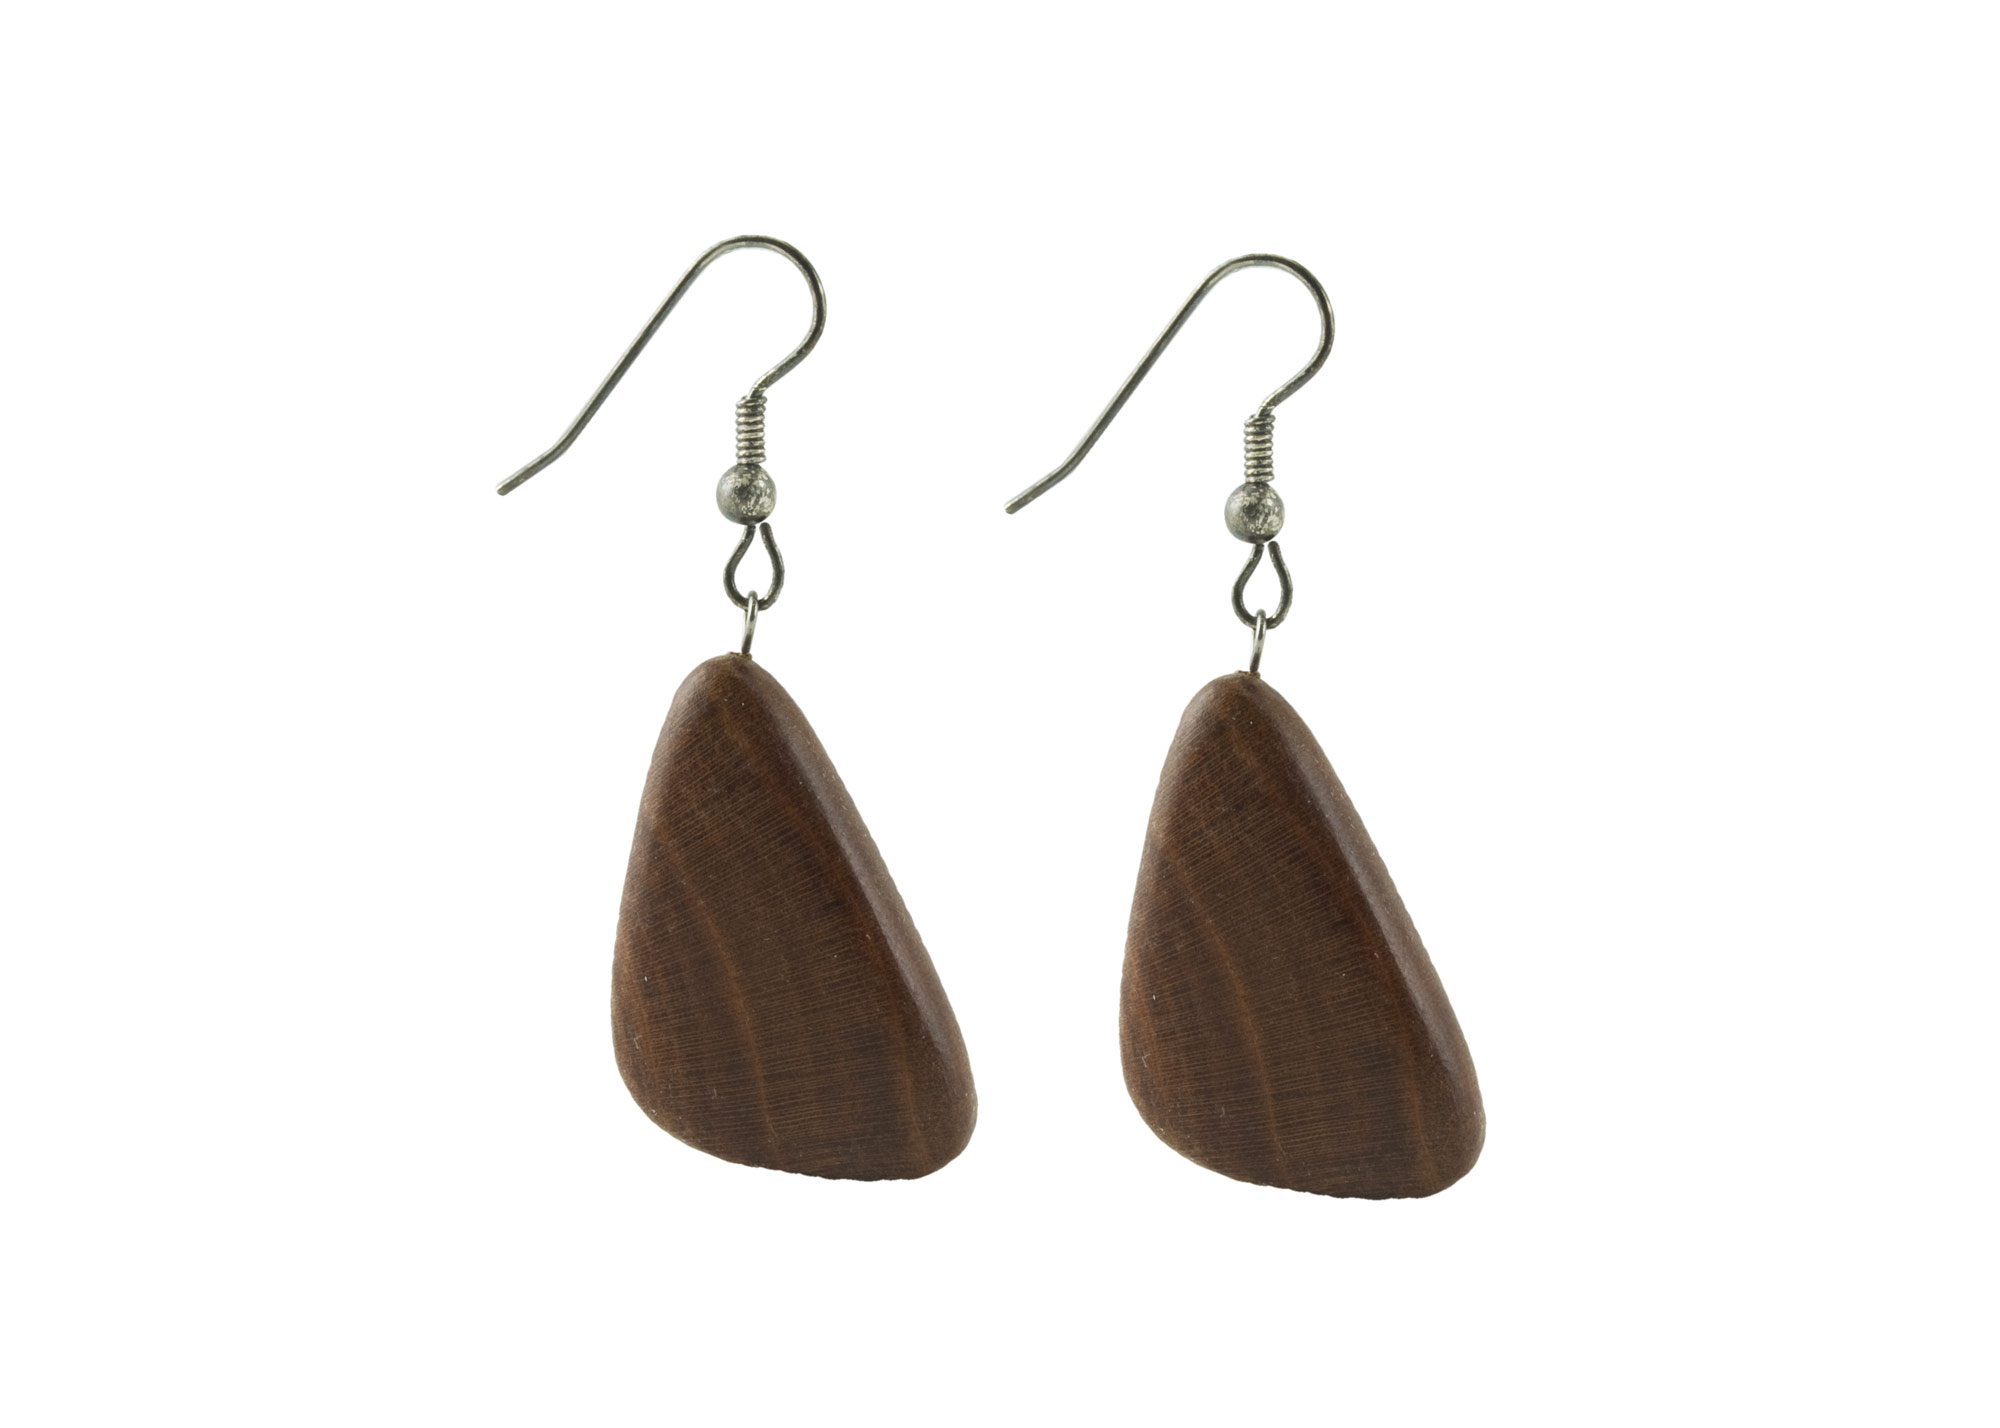 Buy Black Sea Wooden Earrings Small Asymmetrical Light at GoldenCockerel.com